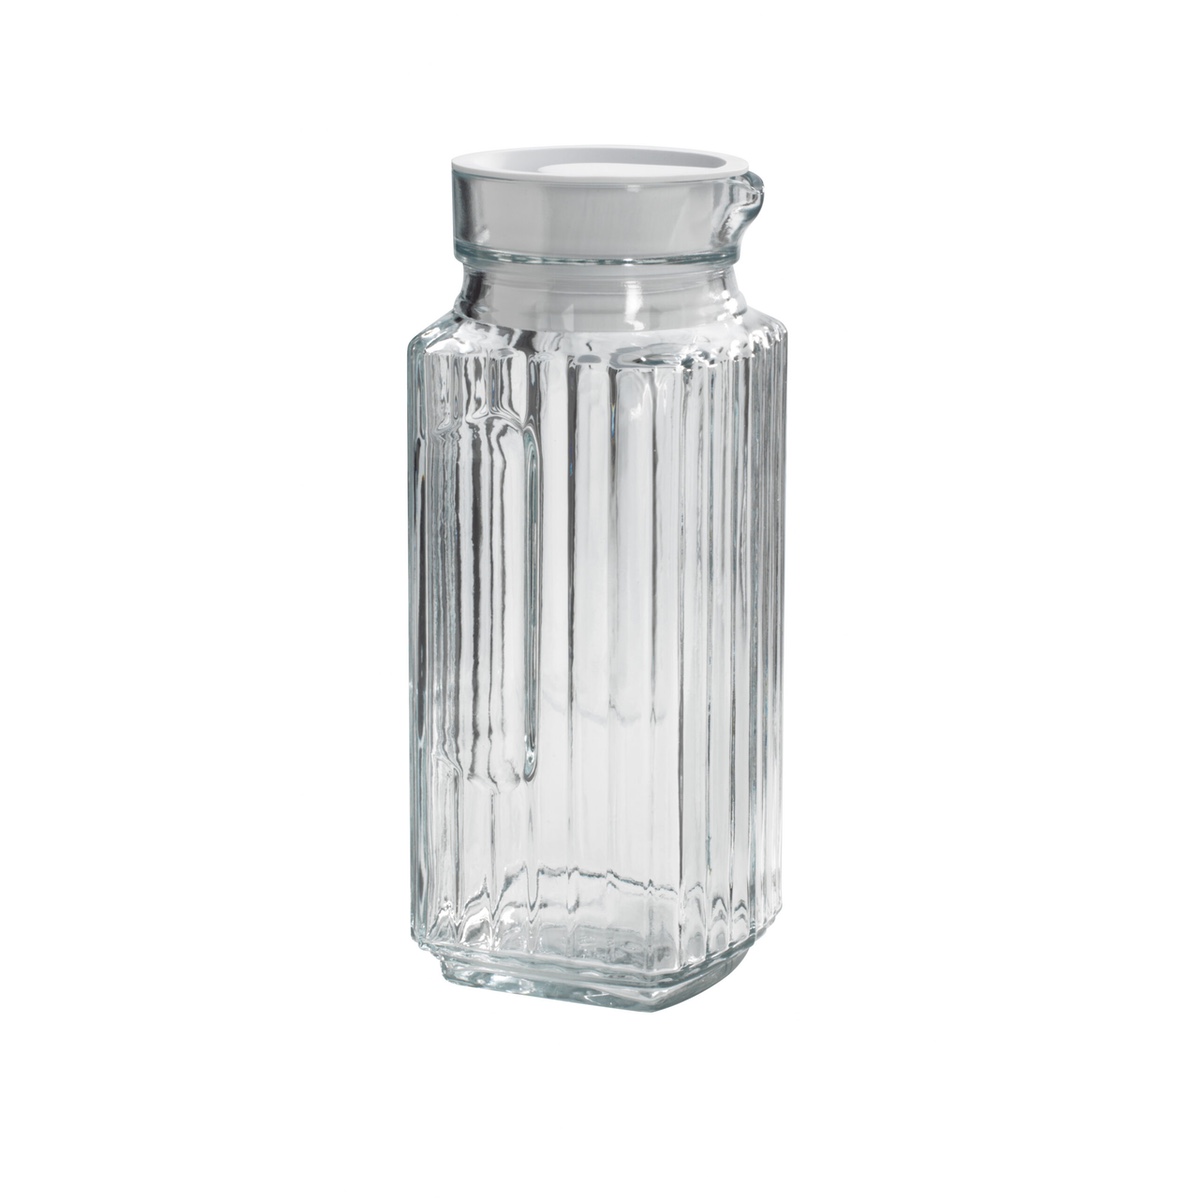 NUOLUX Pitcher Glass Lid Water Lid Small Lids Cork Carafe Pitchers Pitcher  Quart Beverage Ceramic Large 2Tea